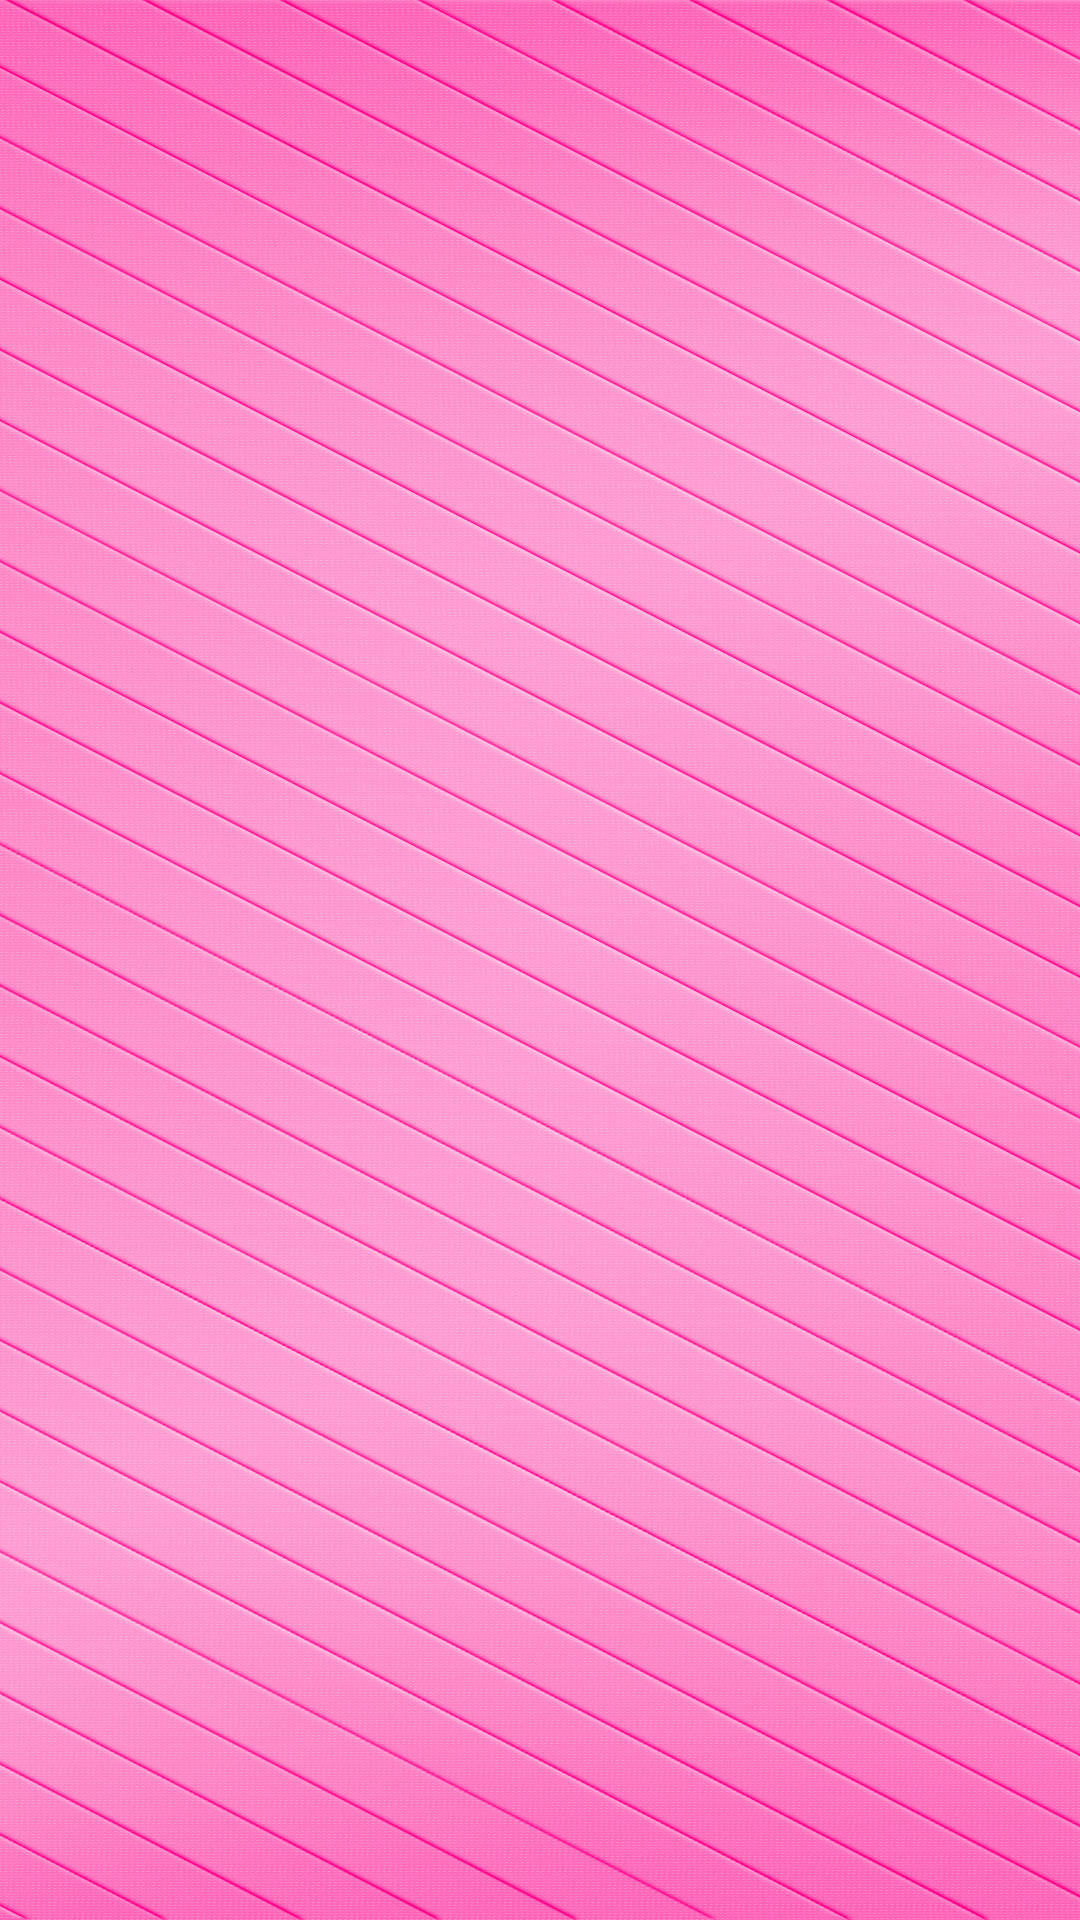 Hd Wallpaper In Pink Colour - HD Wallpaper 